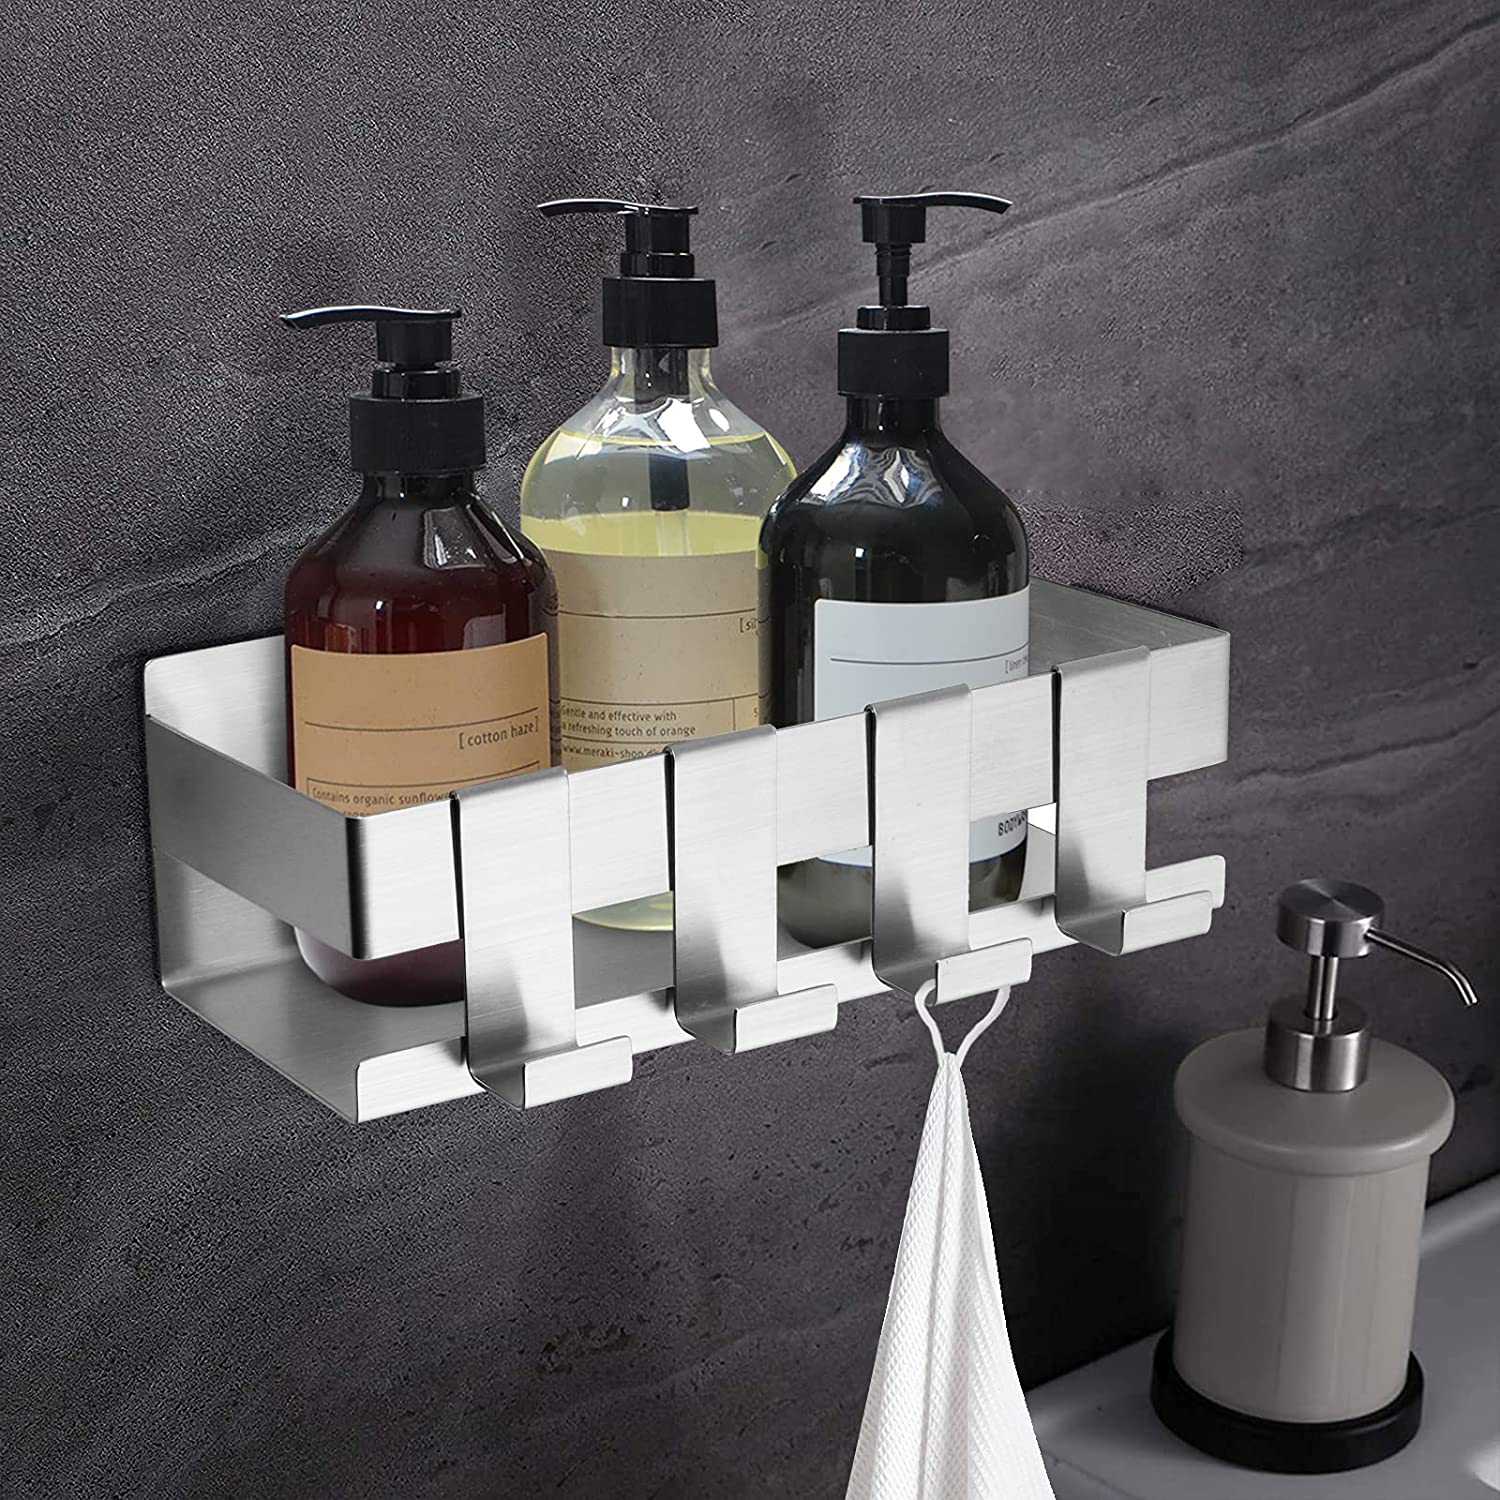 Homgen Shower Shelf with No Drilling Self Adhesive